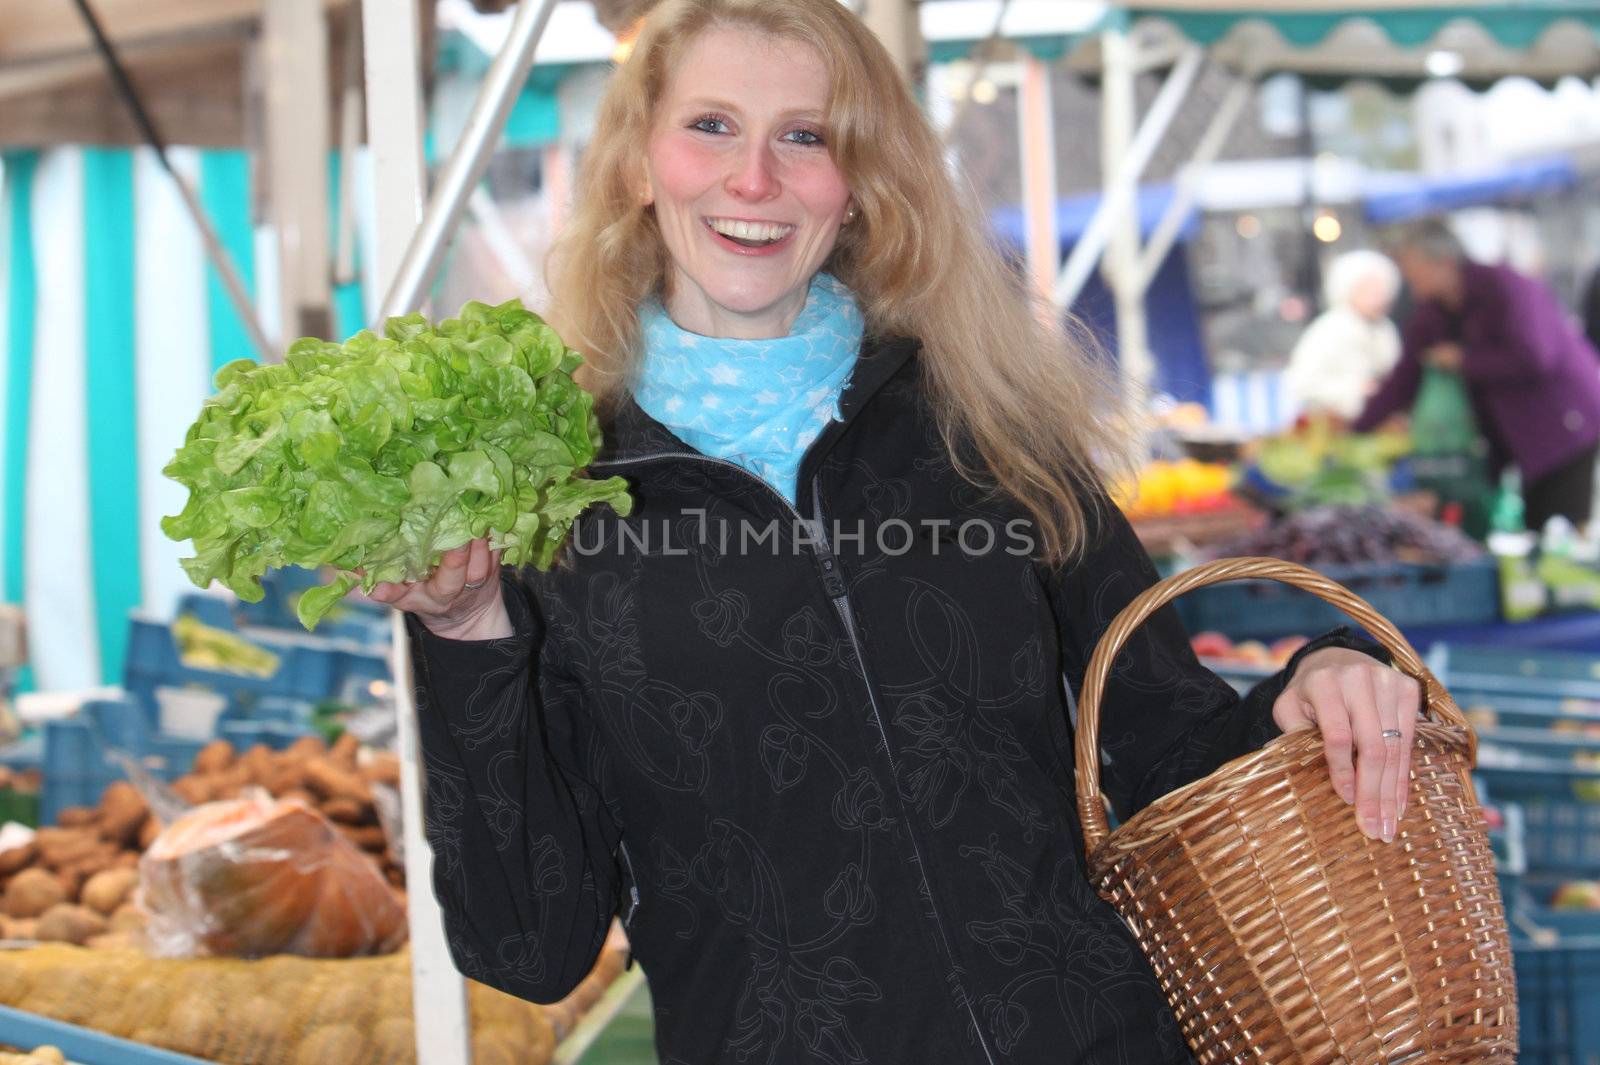 smiling woman at the market buys a fresh salad by Farina6000